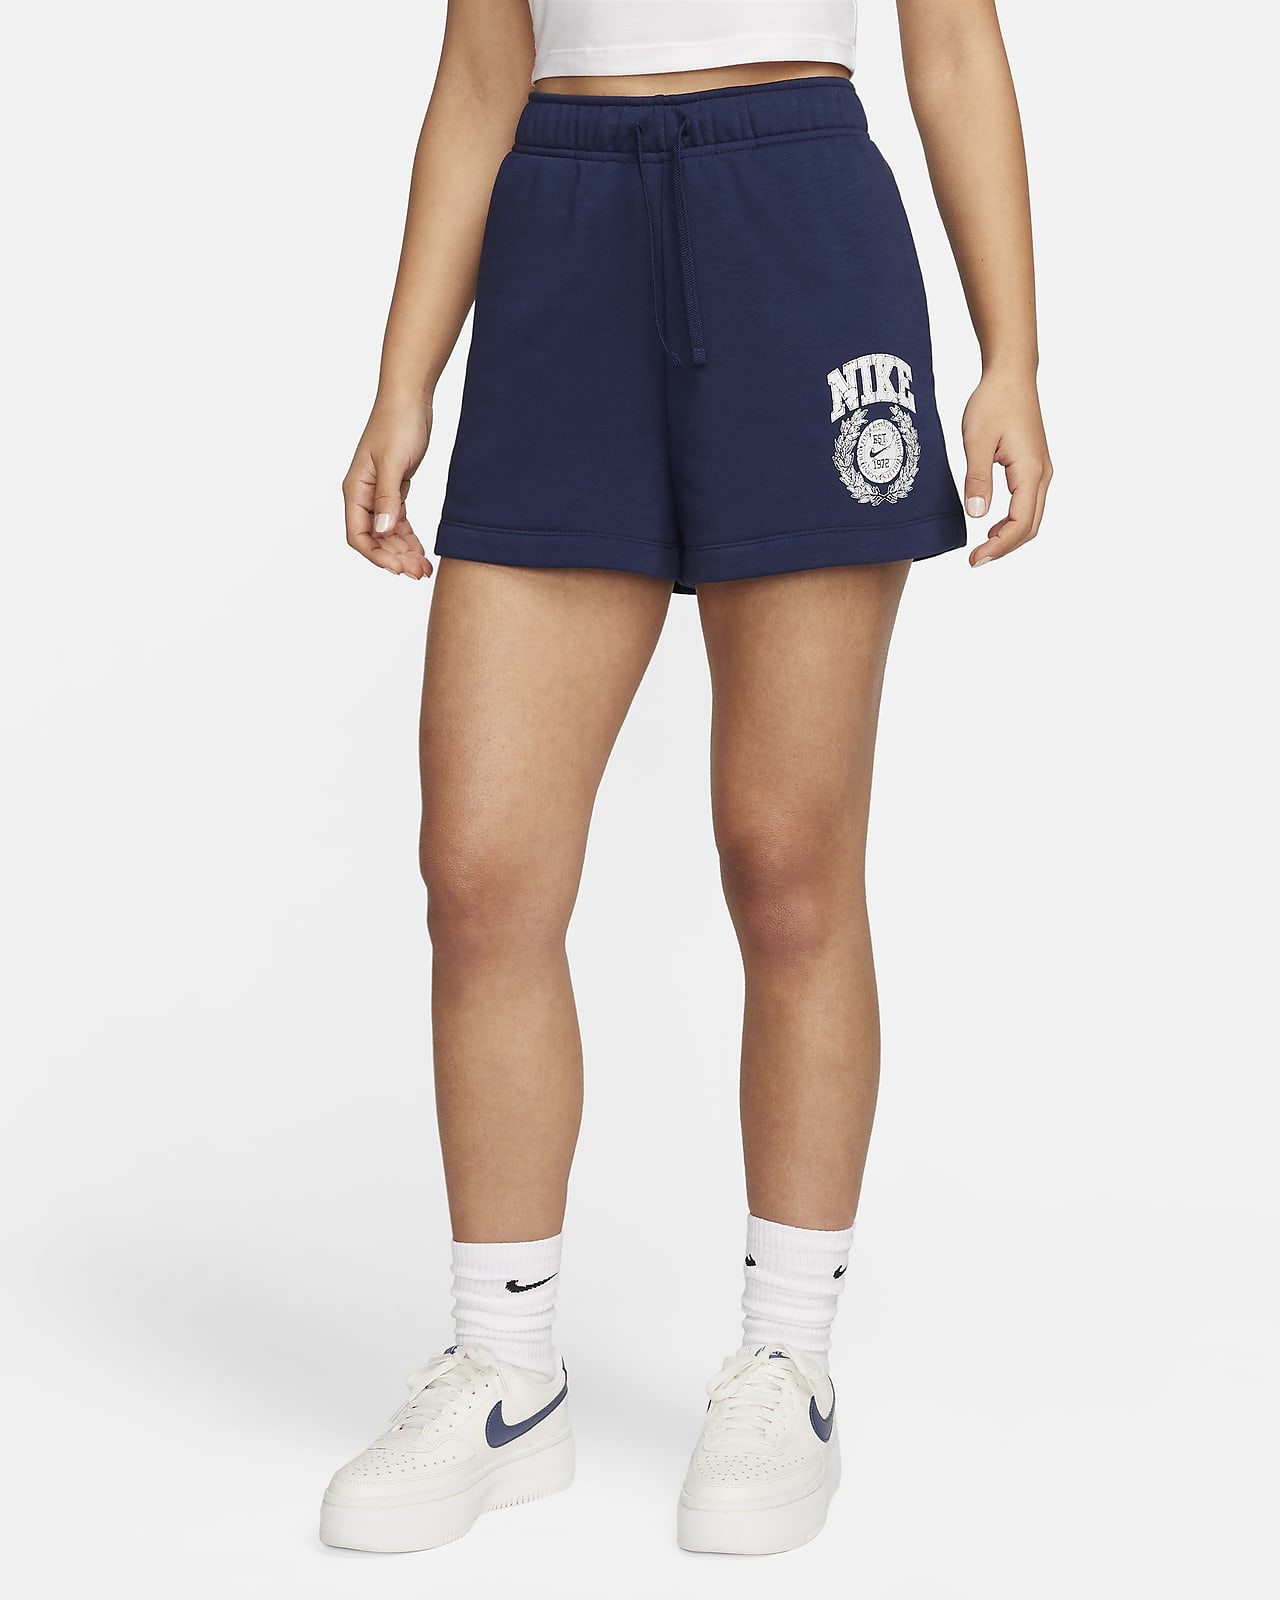 Fleece Sportswear Nike Women\'s Club Shorts. Graphic Mid-Rise